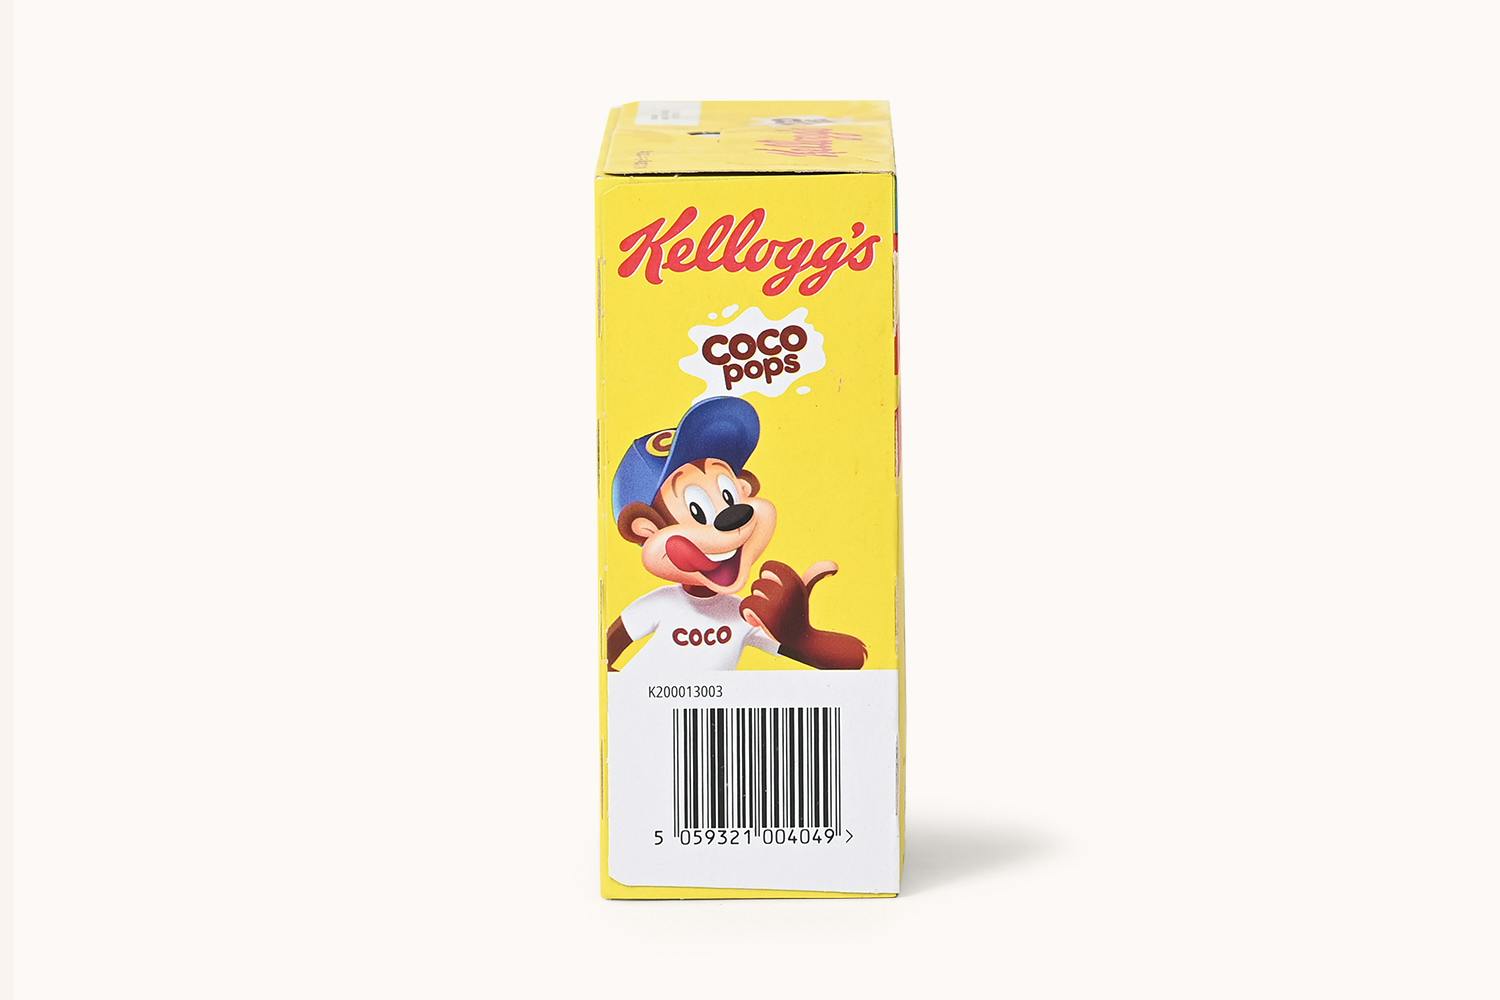 /k/e/kellogs-cereal-coco-pops-bx-120g-3_p7shnnhyjsk0zhpk.jpg